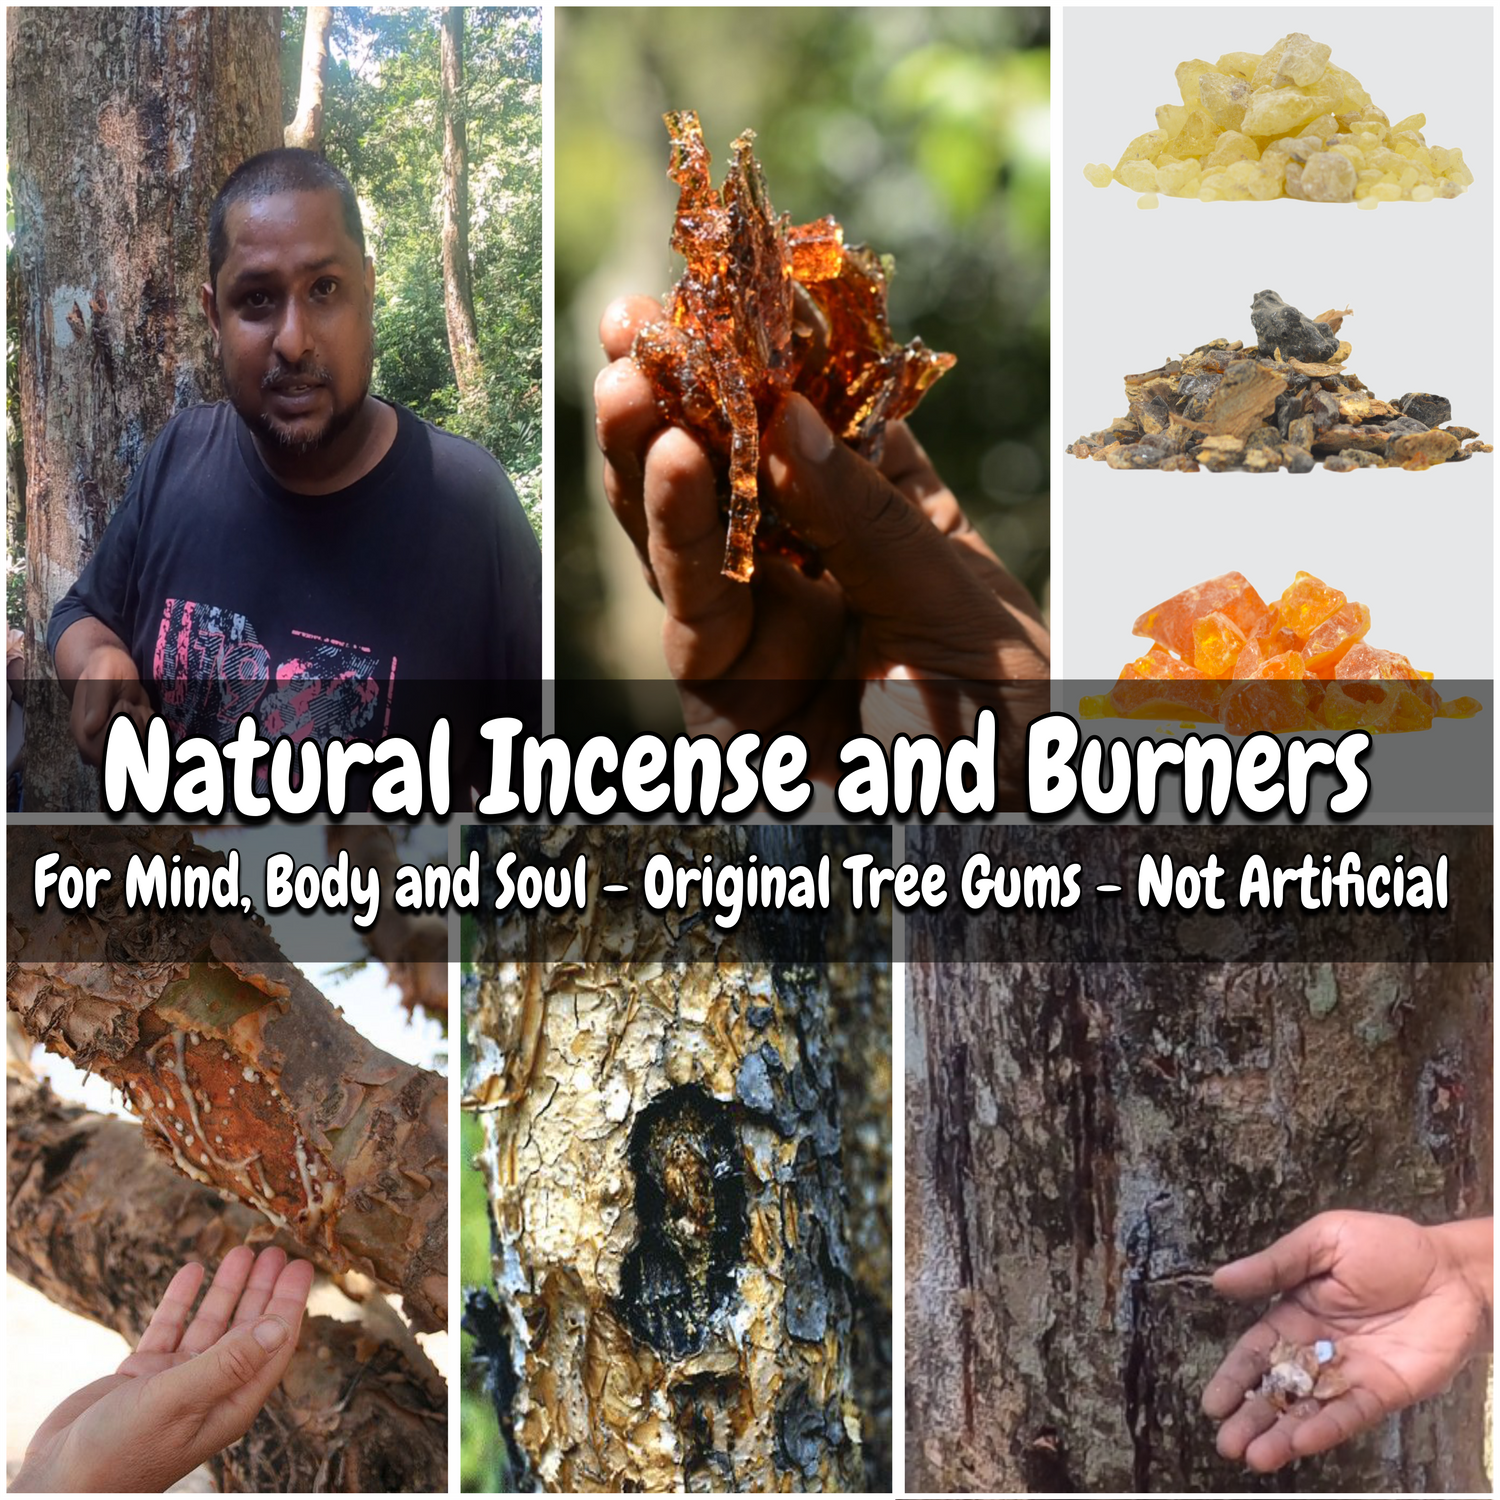 Natural Incense And Burners - Original Tree Gums - Not Artificial